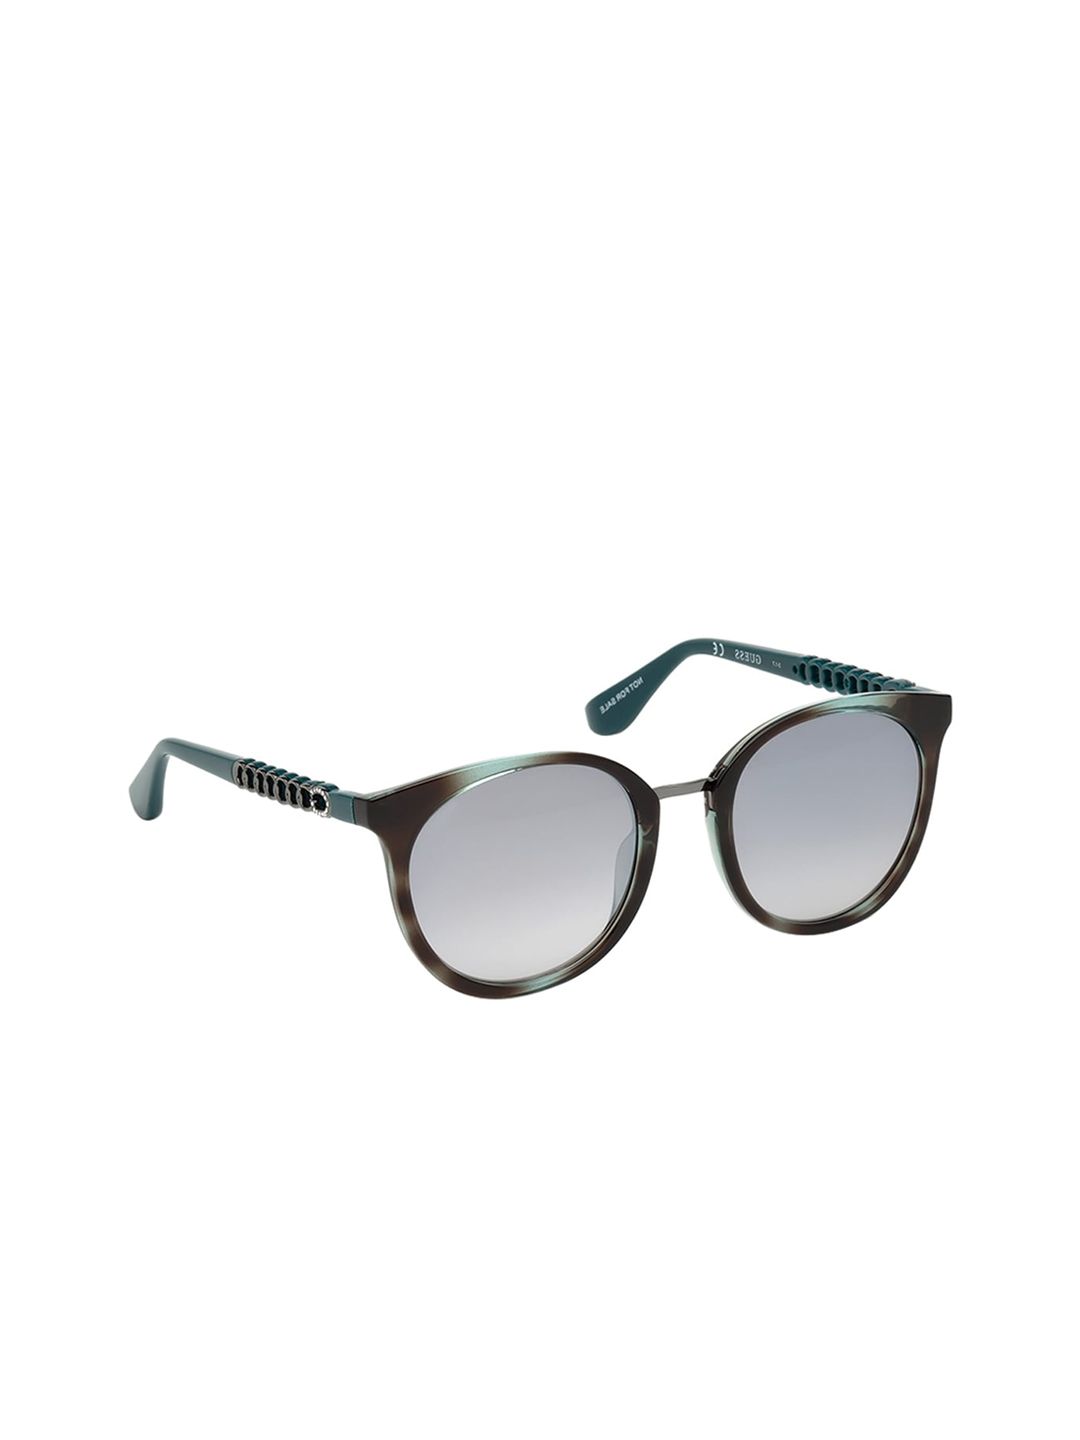 Guess Women Round Sunglasses GU7544-S 52 98B-Grey Price in India